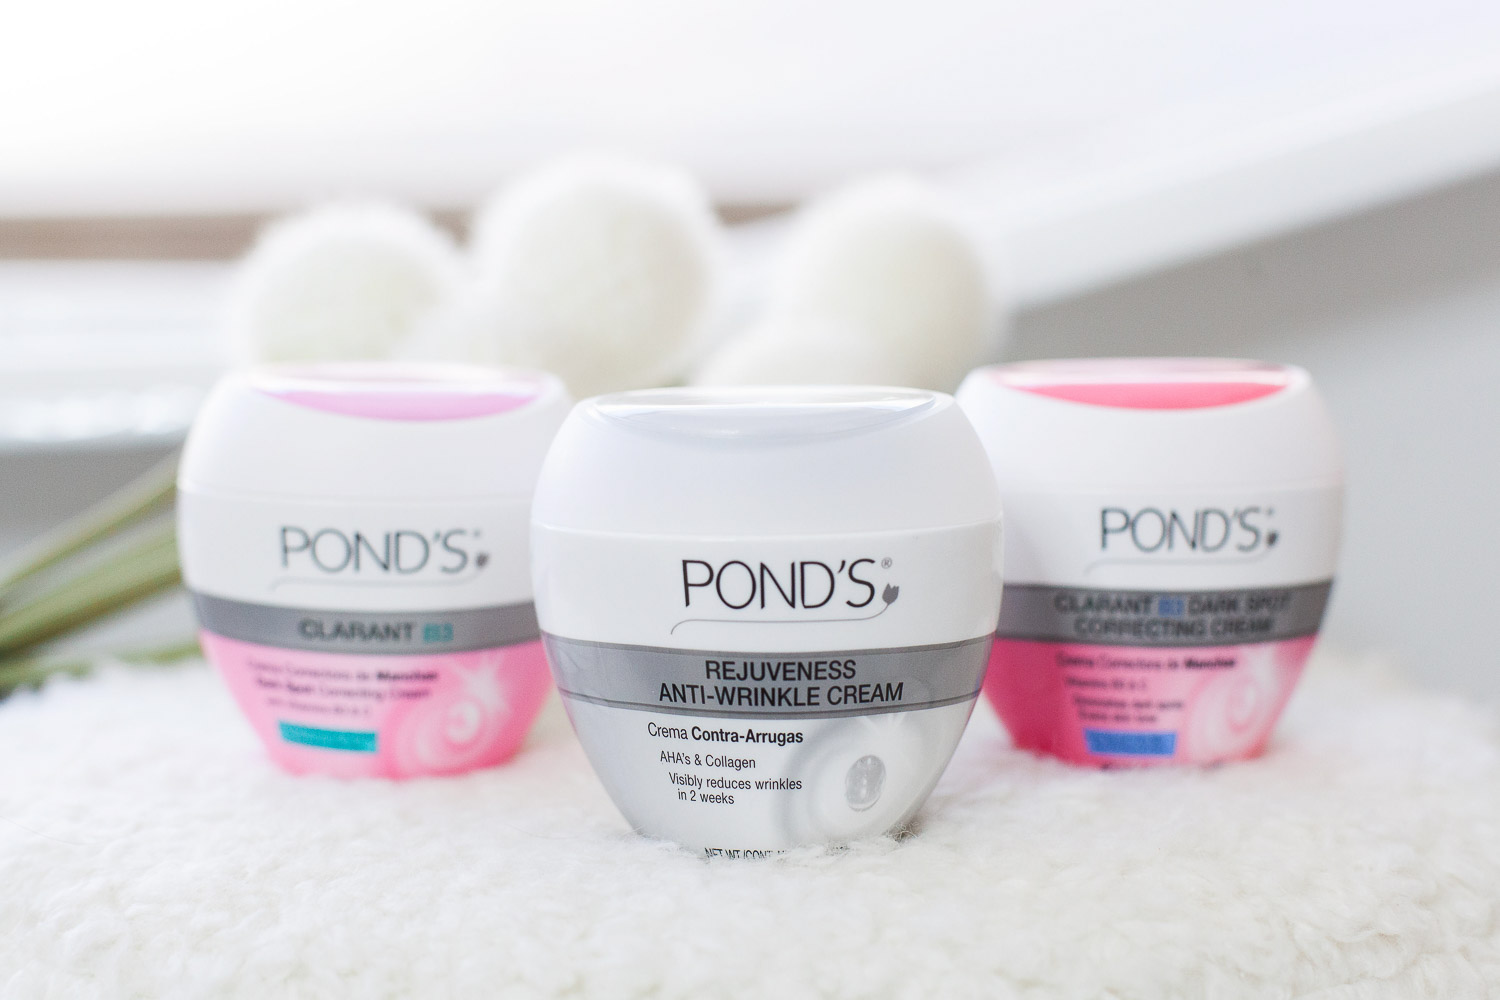 Pond's anti-wrinkle cream